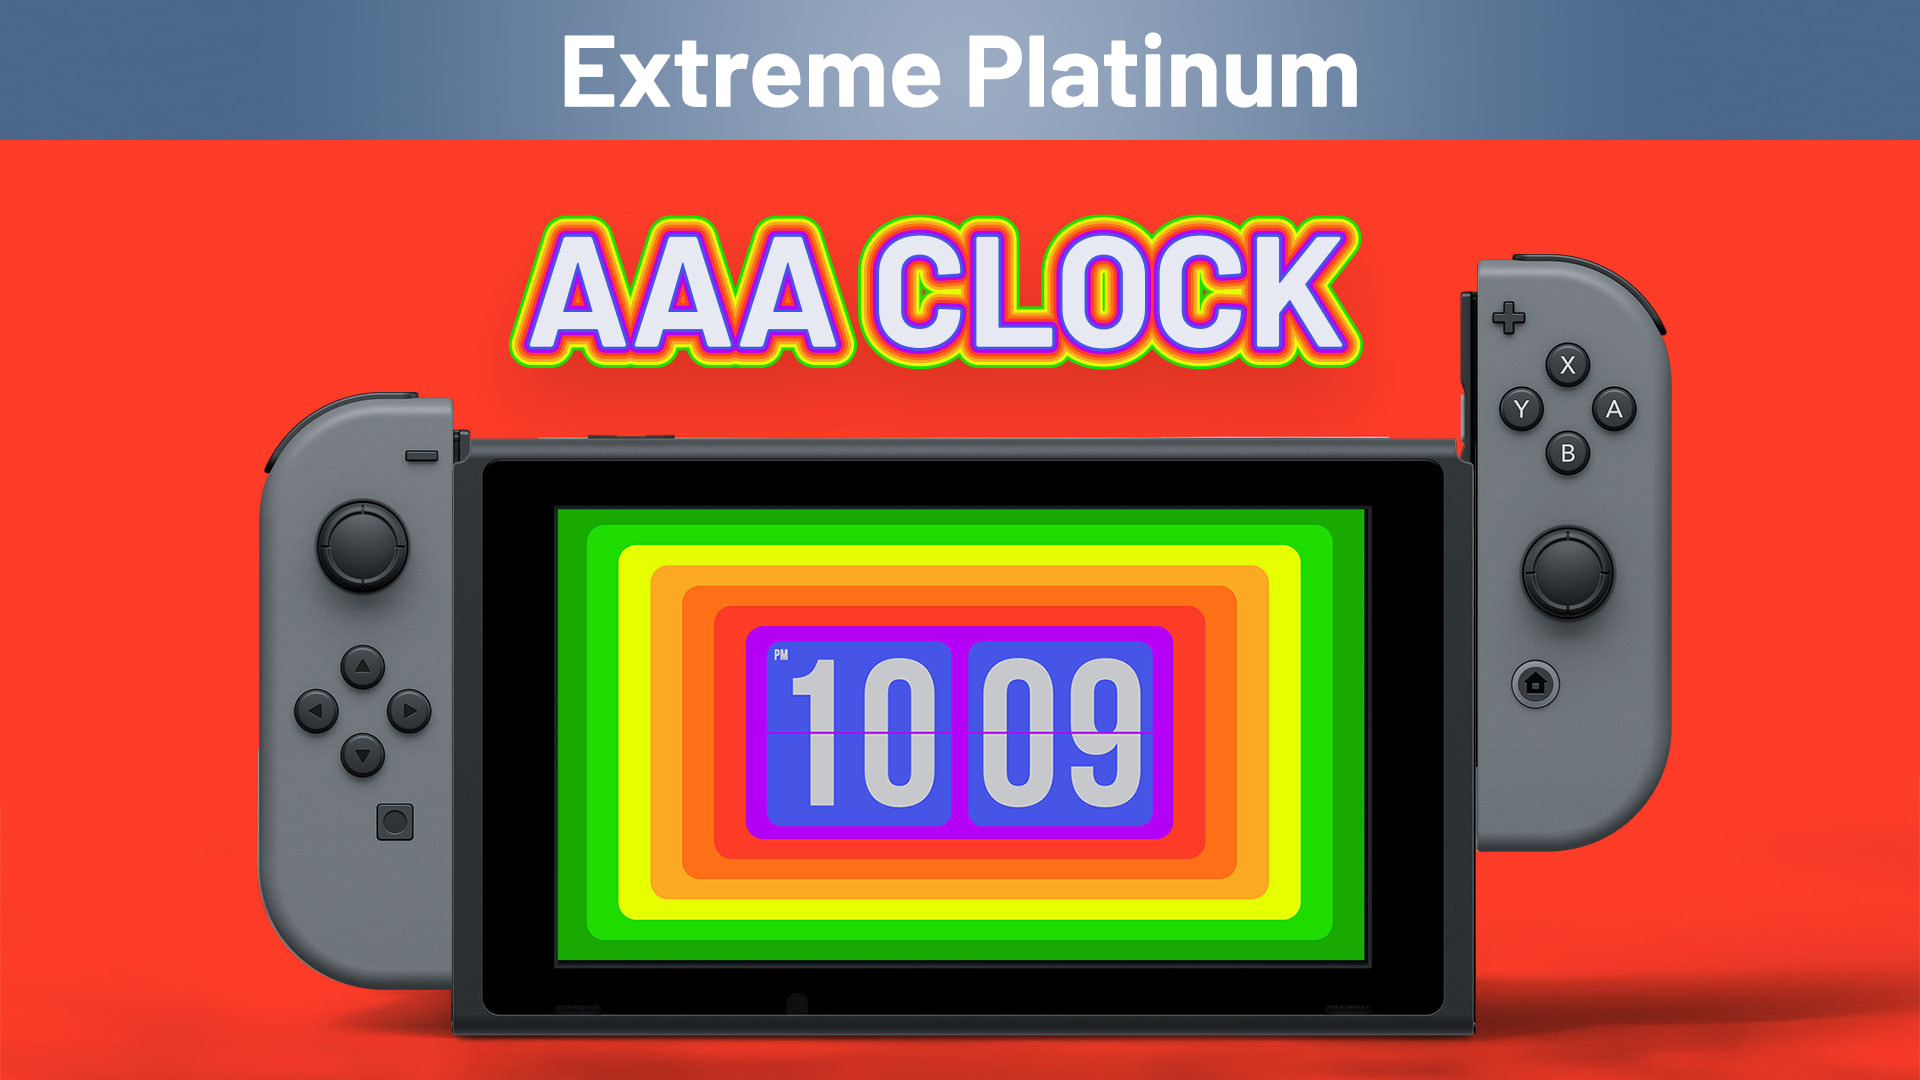 AAA Clock Extreme Platinum